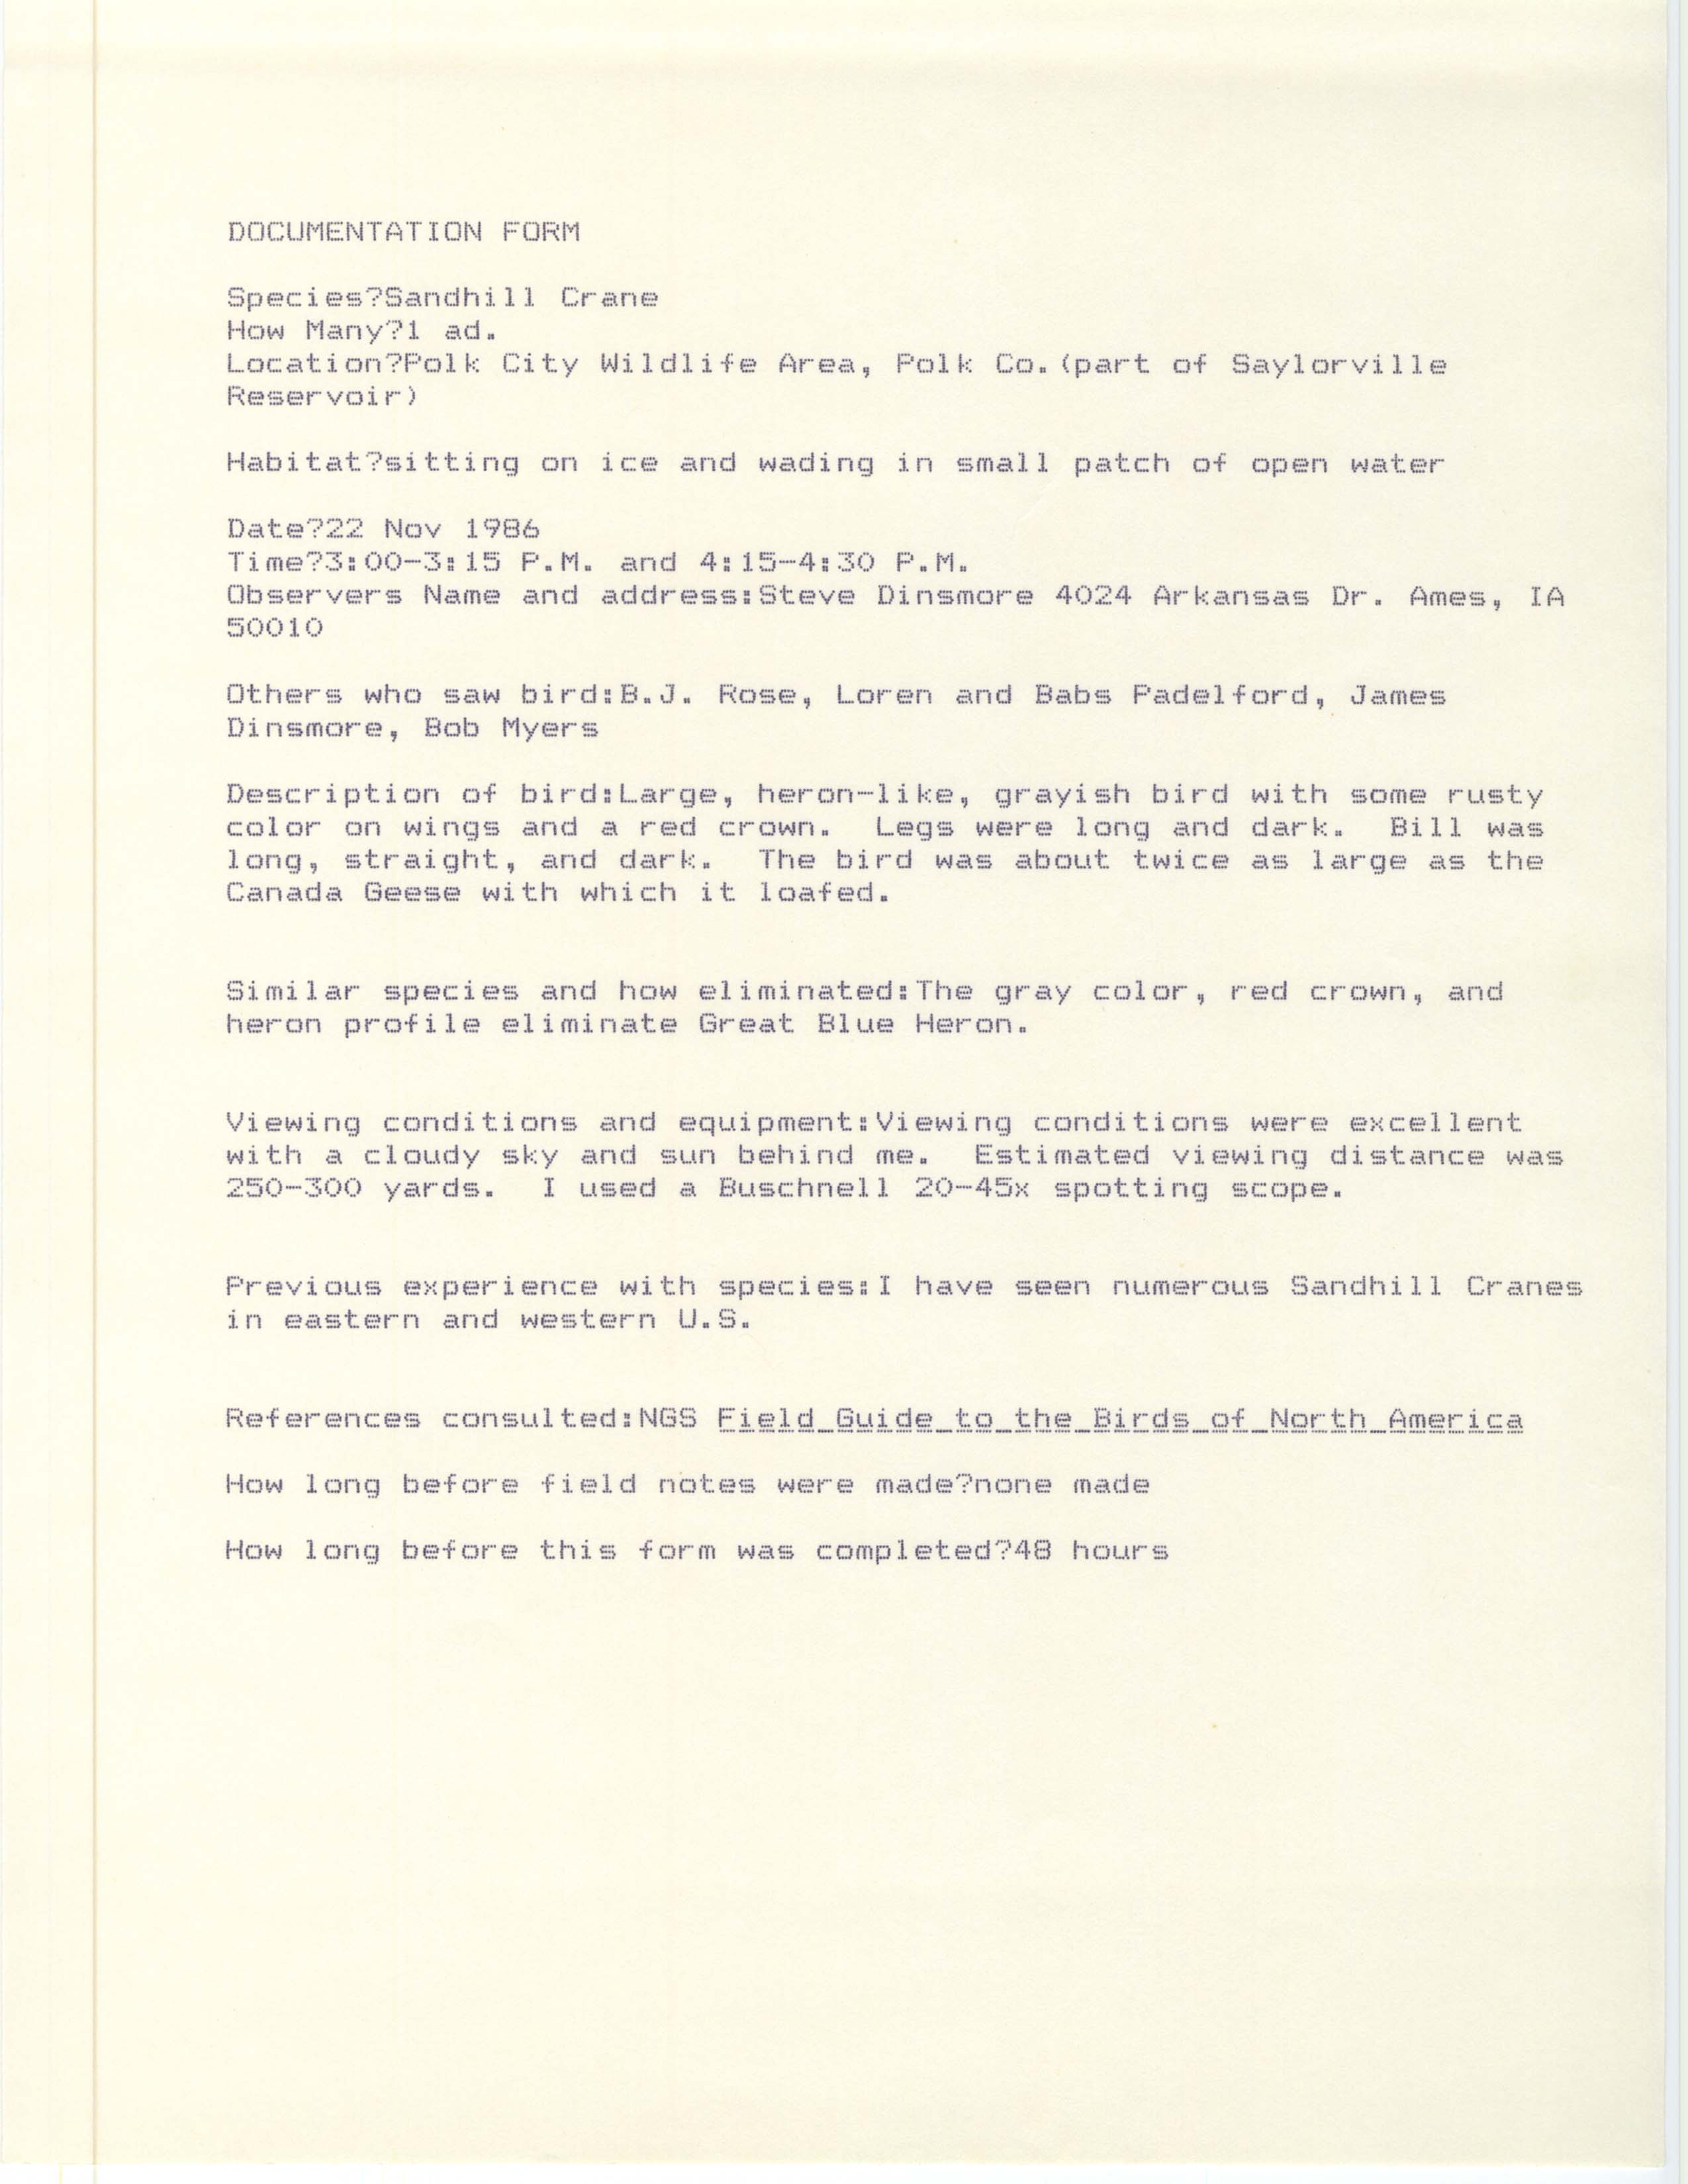 Rare bird documentation form for Sandhill Crane at Polk City Wildlife Area, 1986